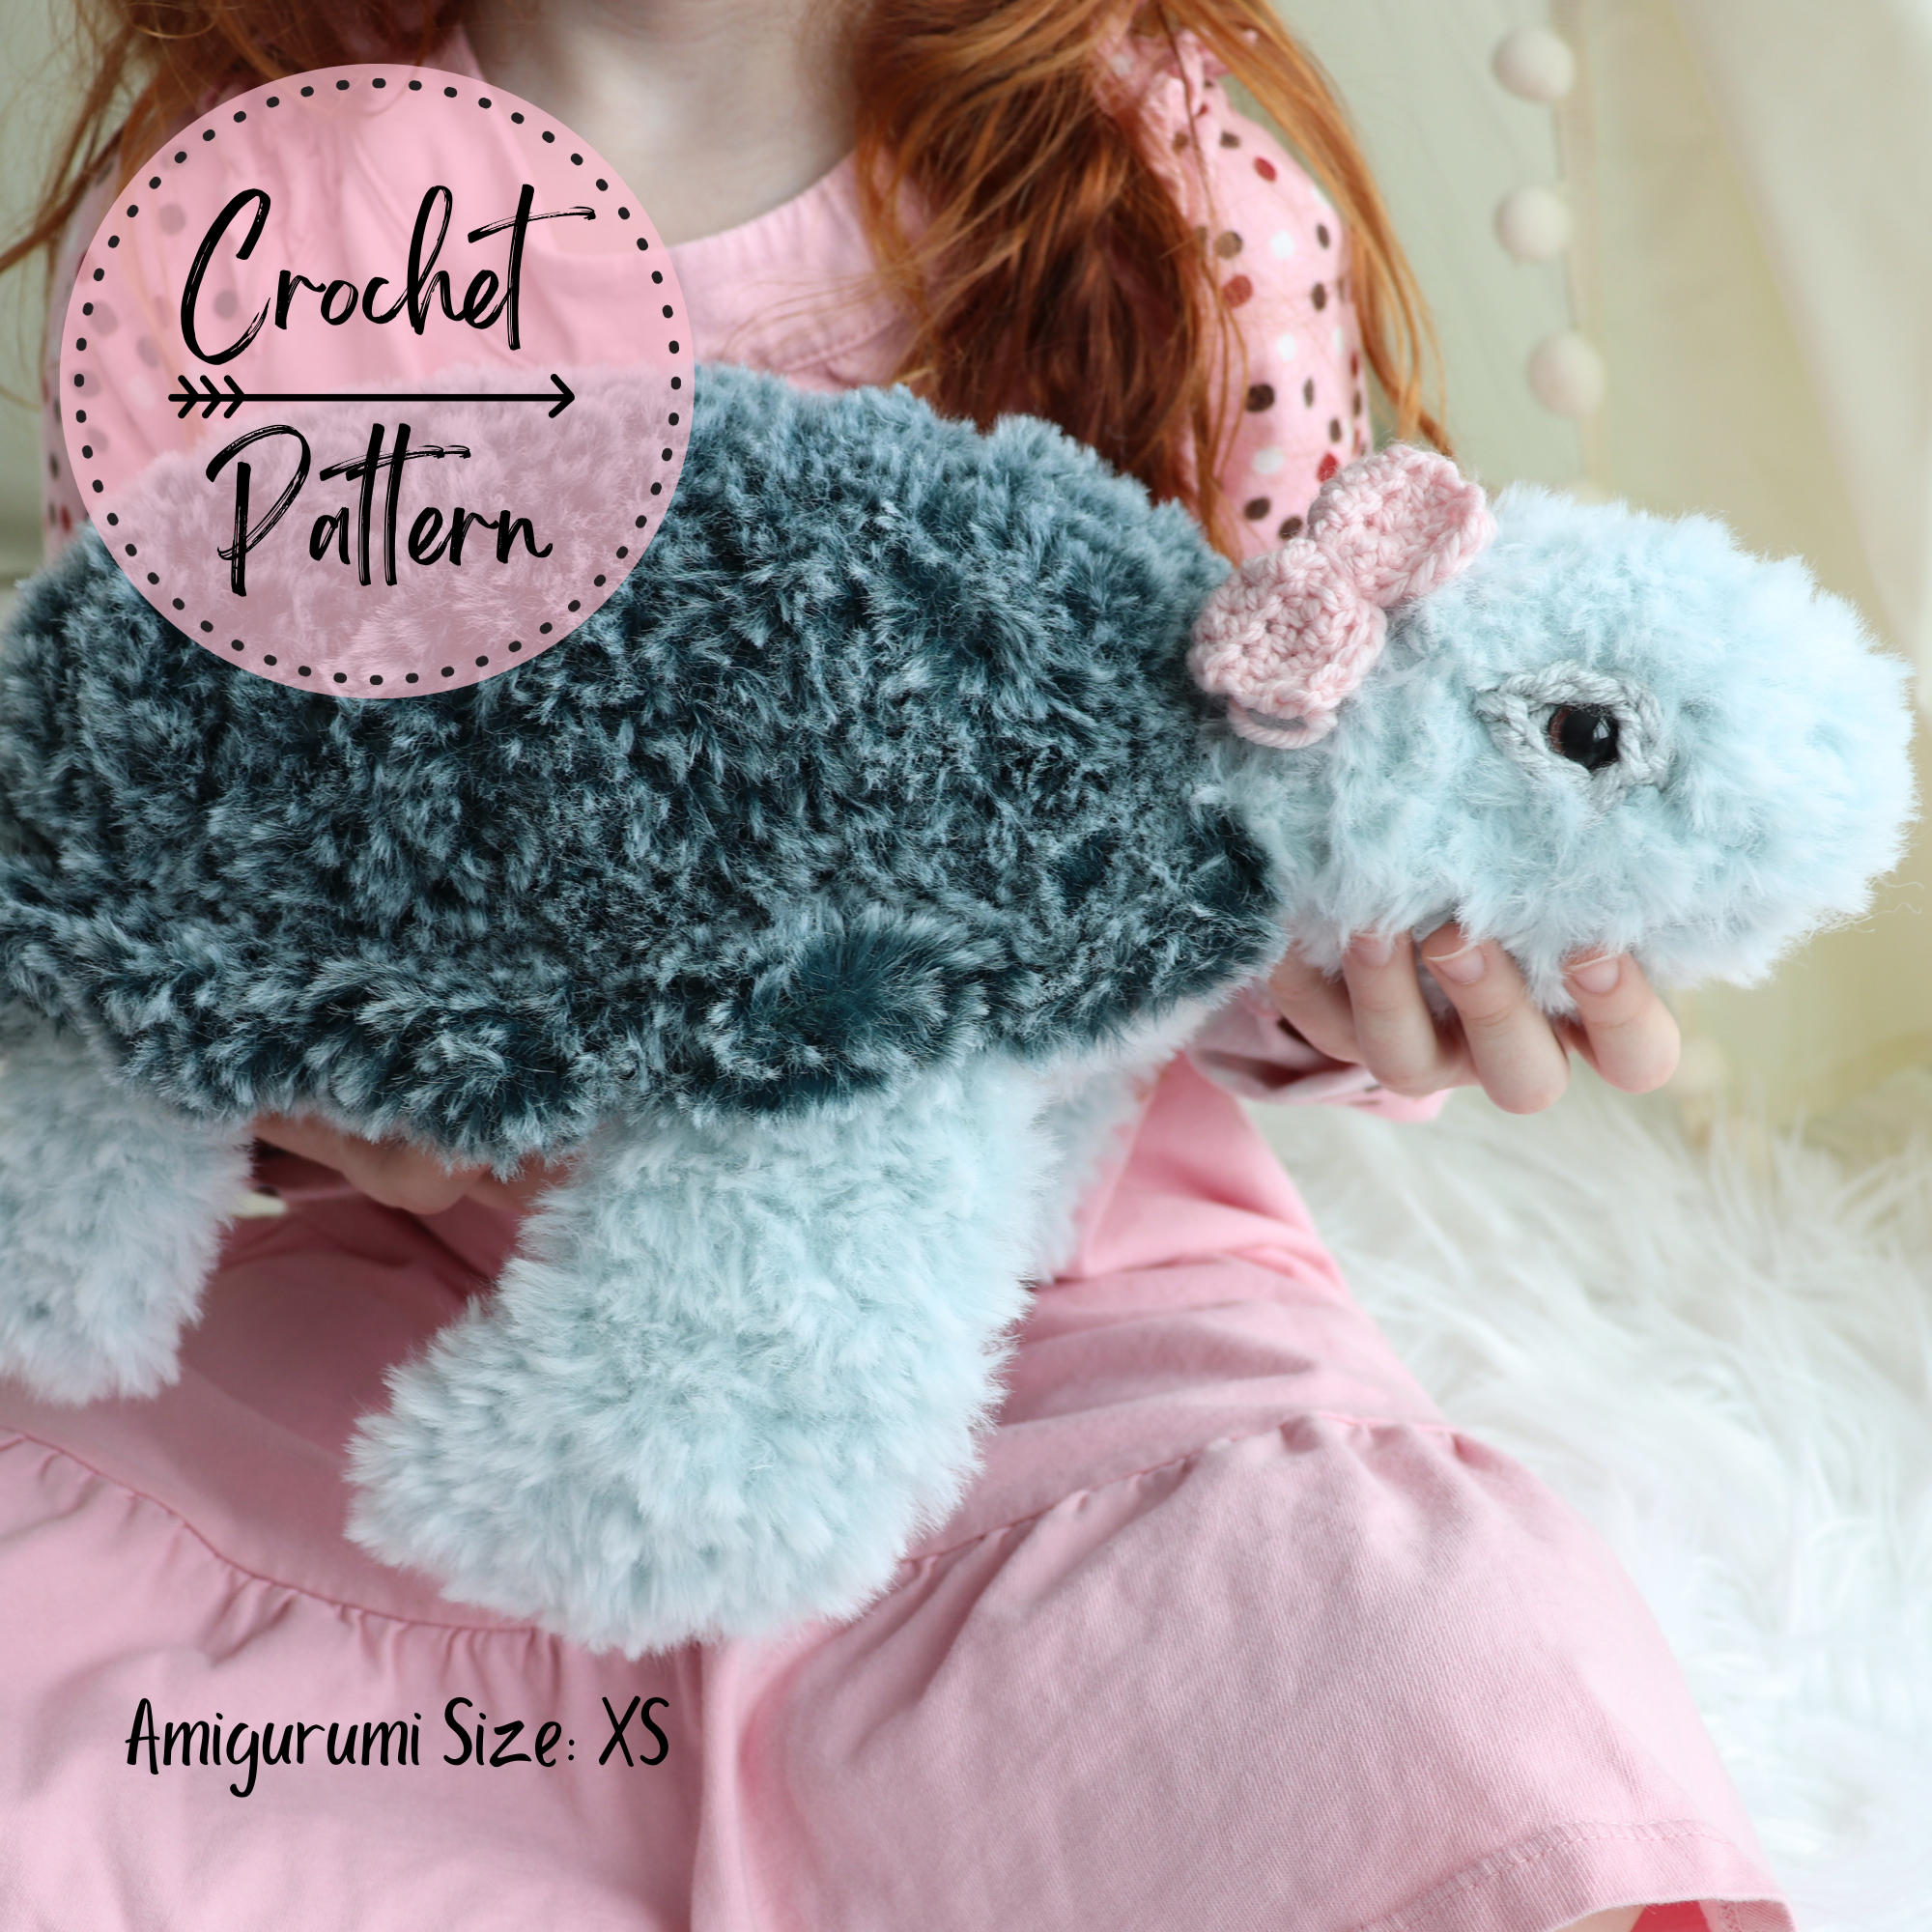 YARN REVIEW: Is Sweet Snuggles yarn worth the hype?, Crochet Axolotl